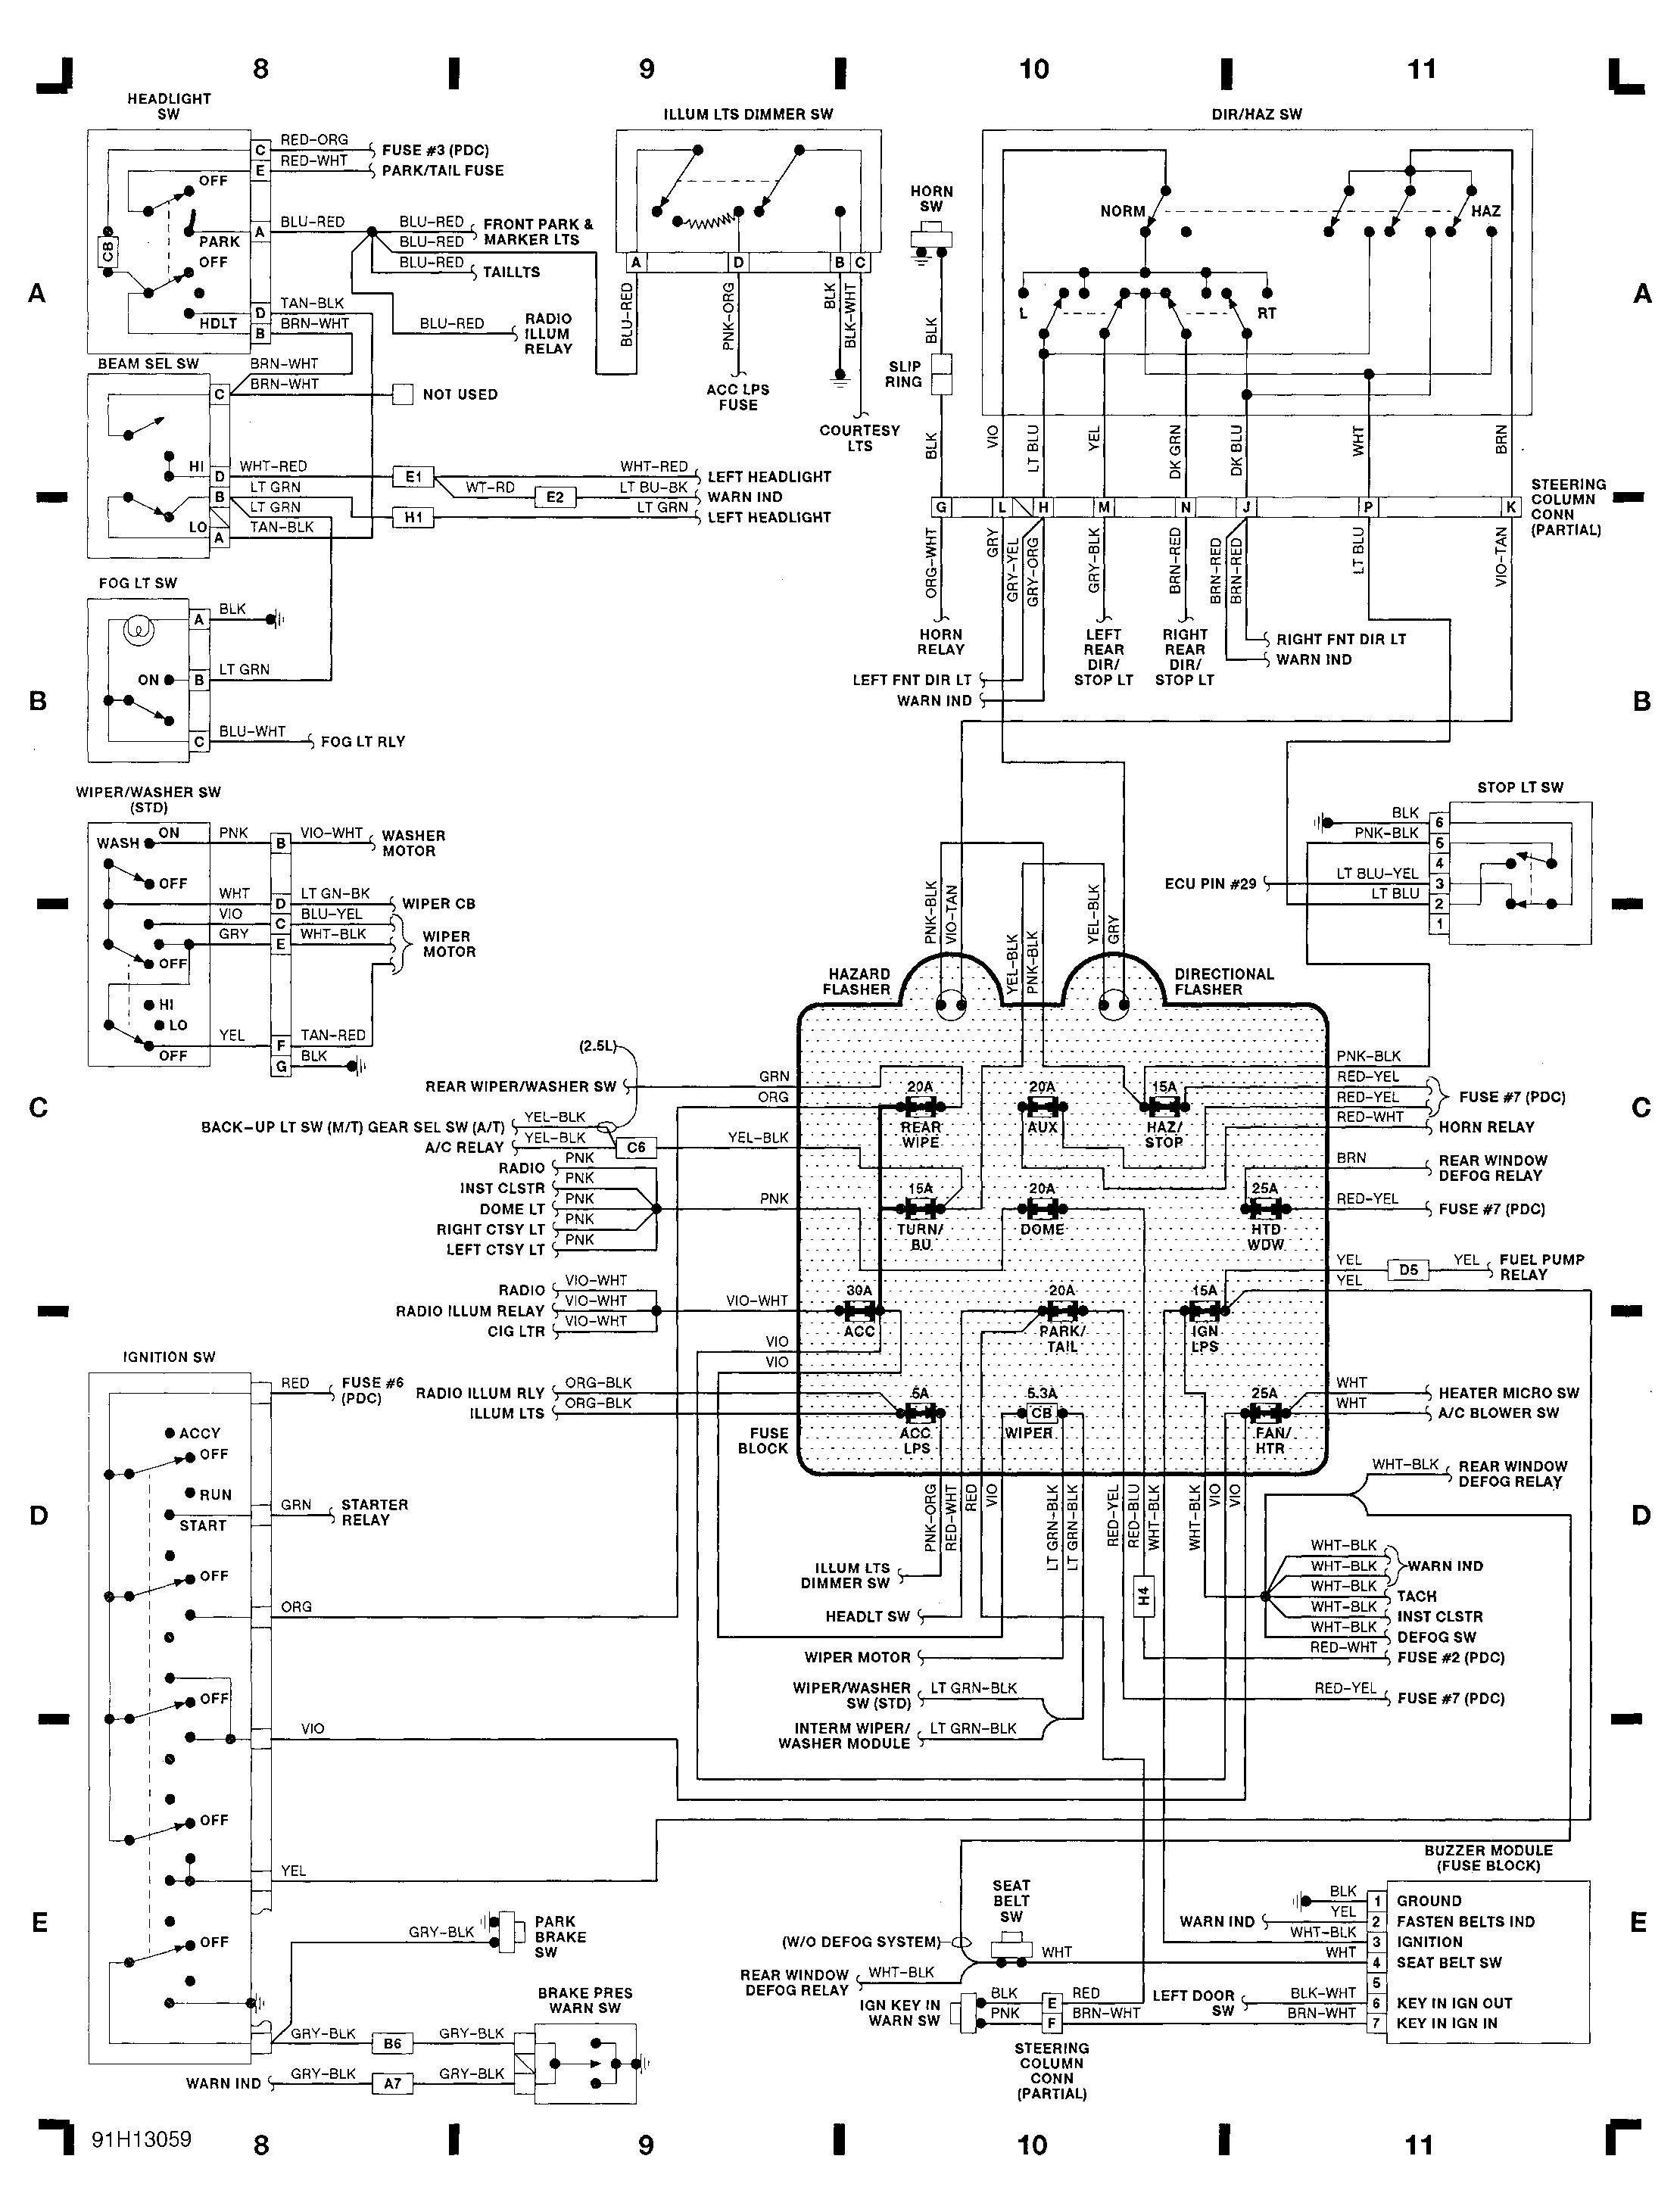 95 Jeep Wrangler Engine Diagram 2001 Jeep Wrangler Engine Diagram Of 95 Jeep Wrangler Engine Diagram